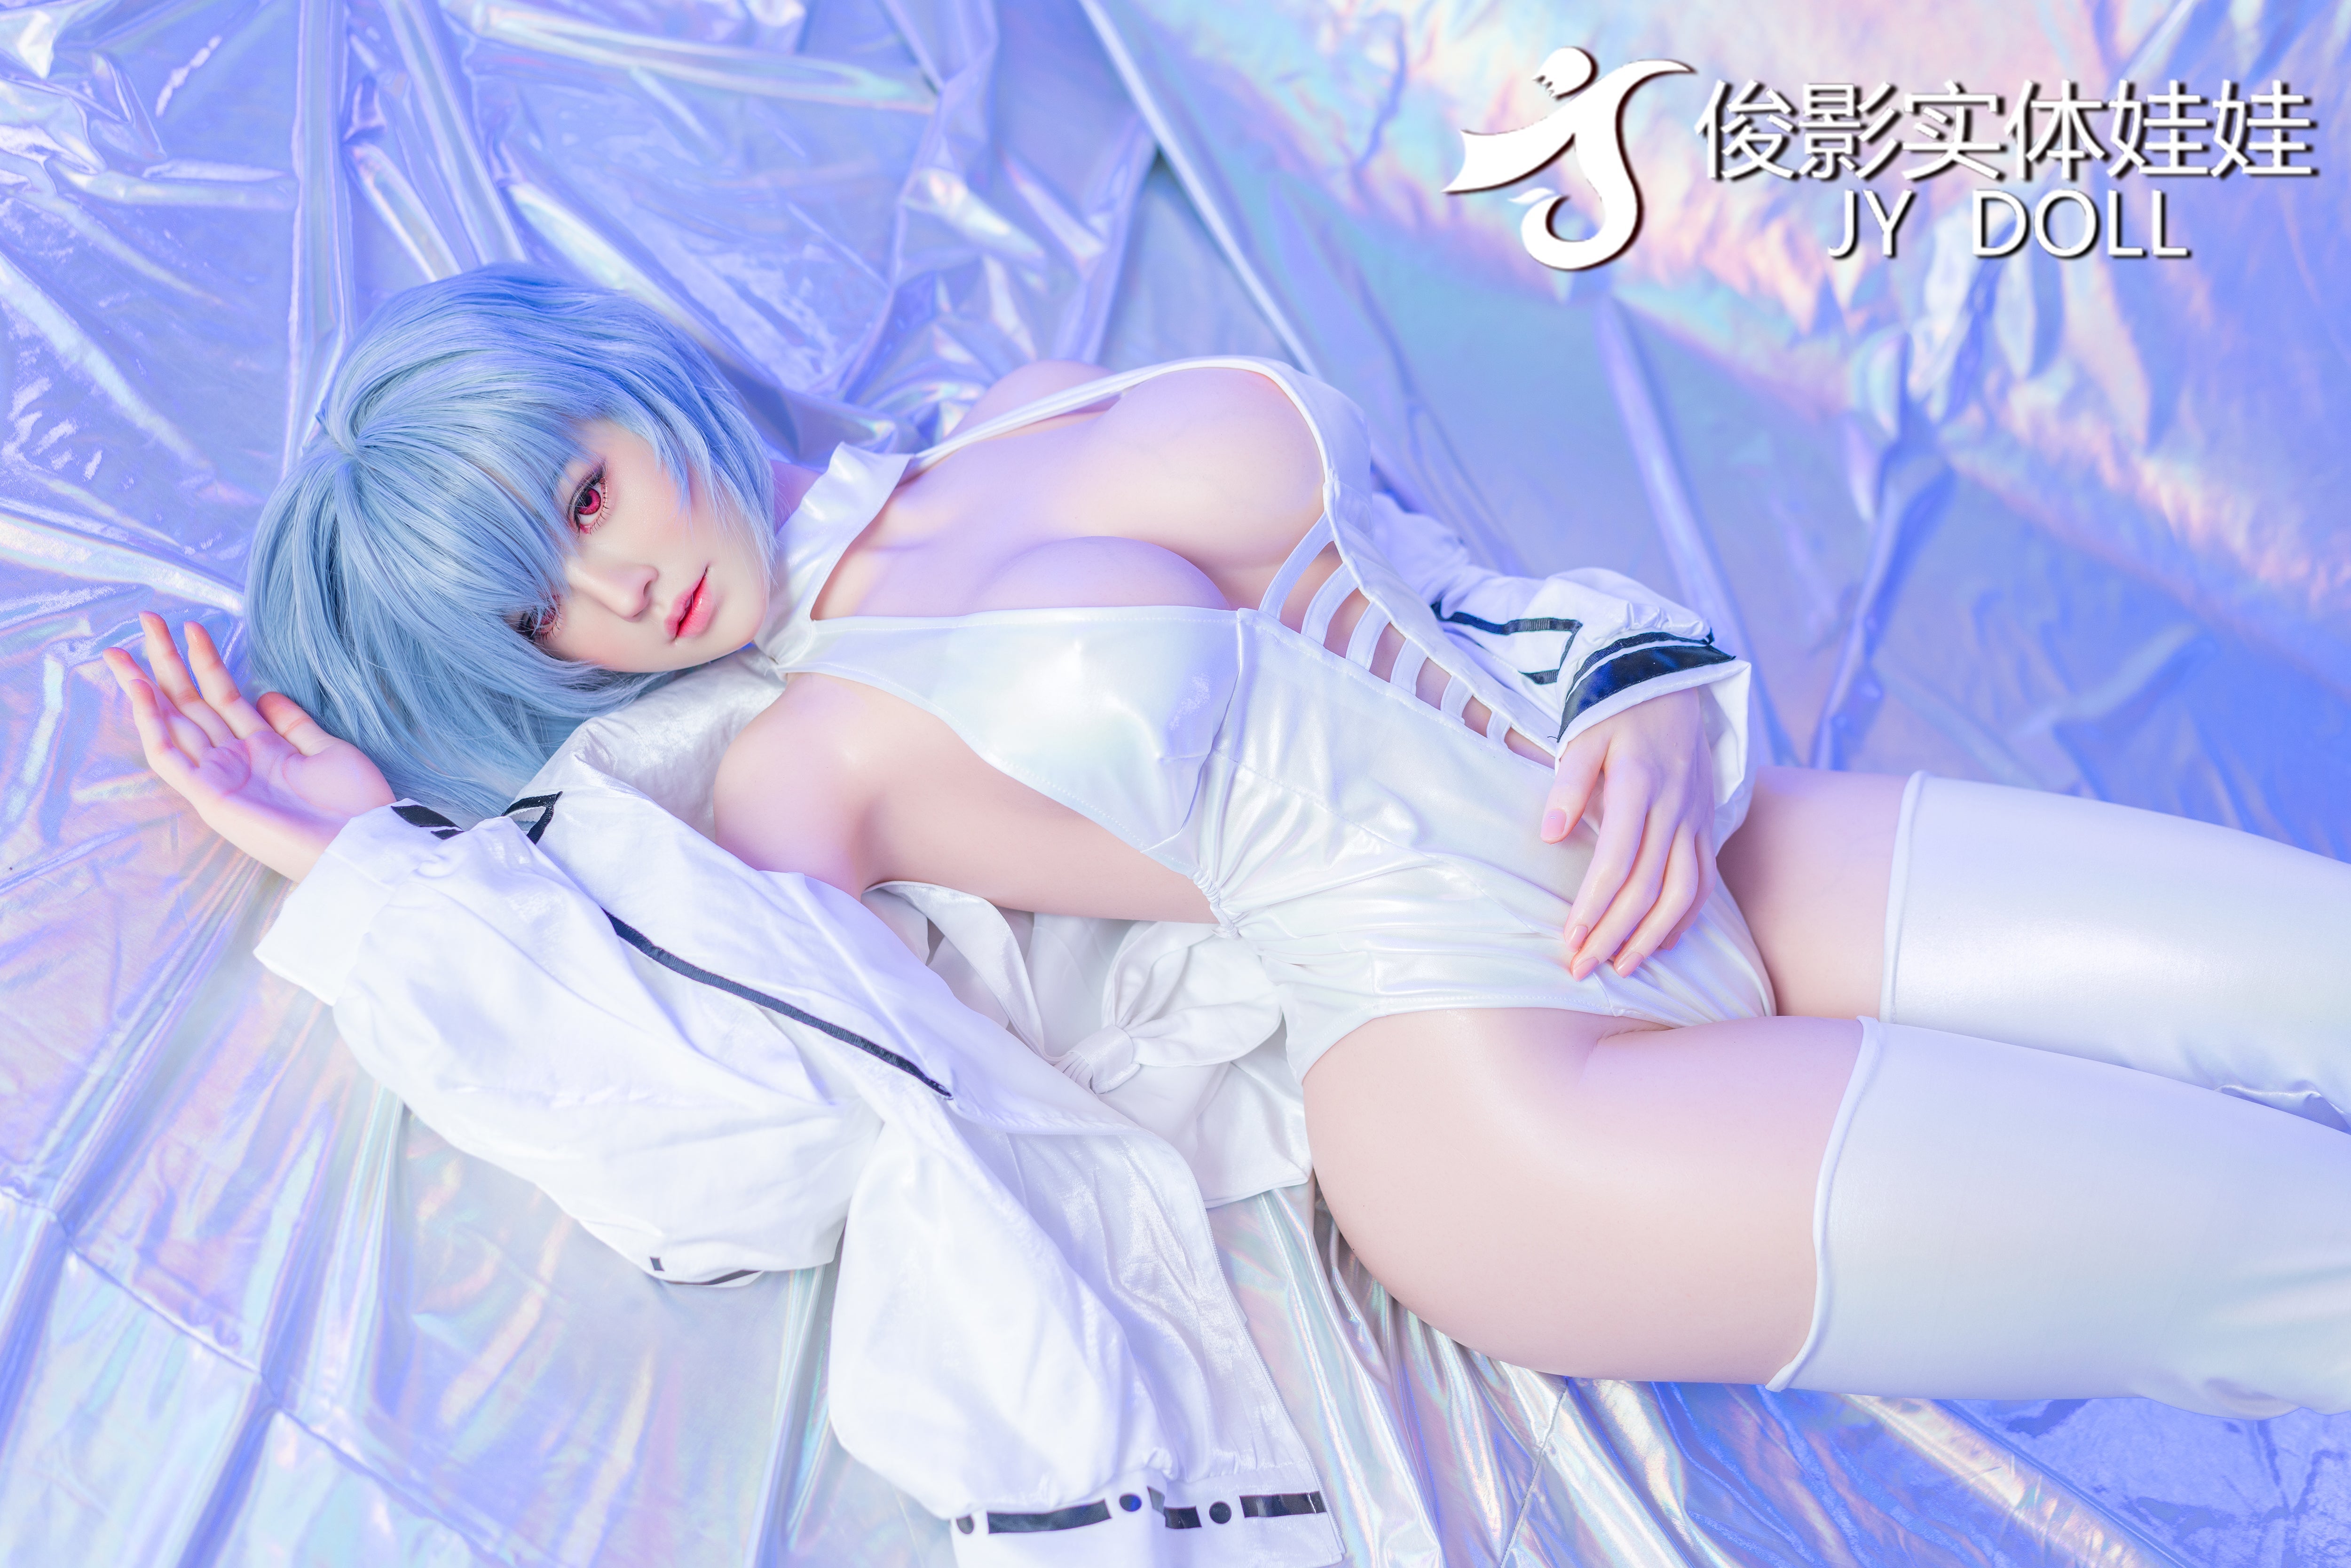 JY Doll 163 cm Silicone - Yanayaki (SG) | Buy Sex Dolls at DOLLS ACTUALLY